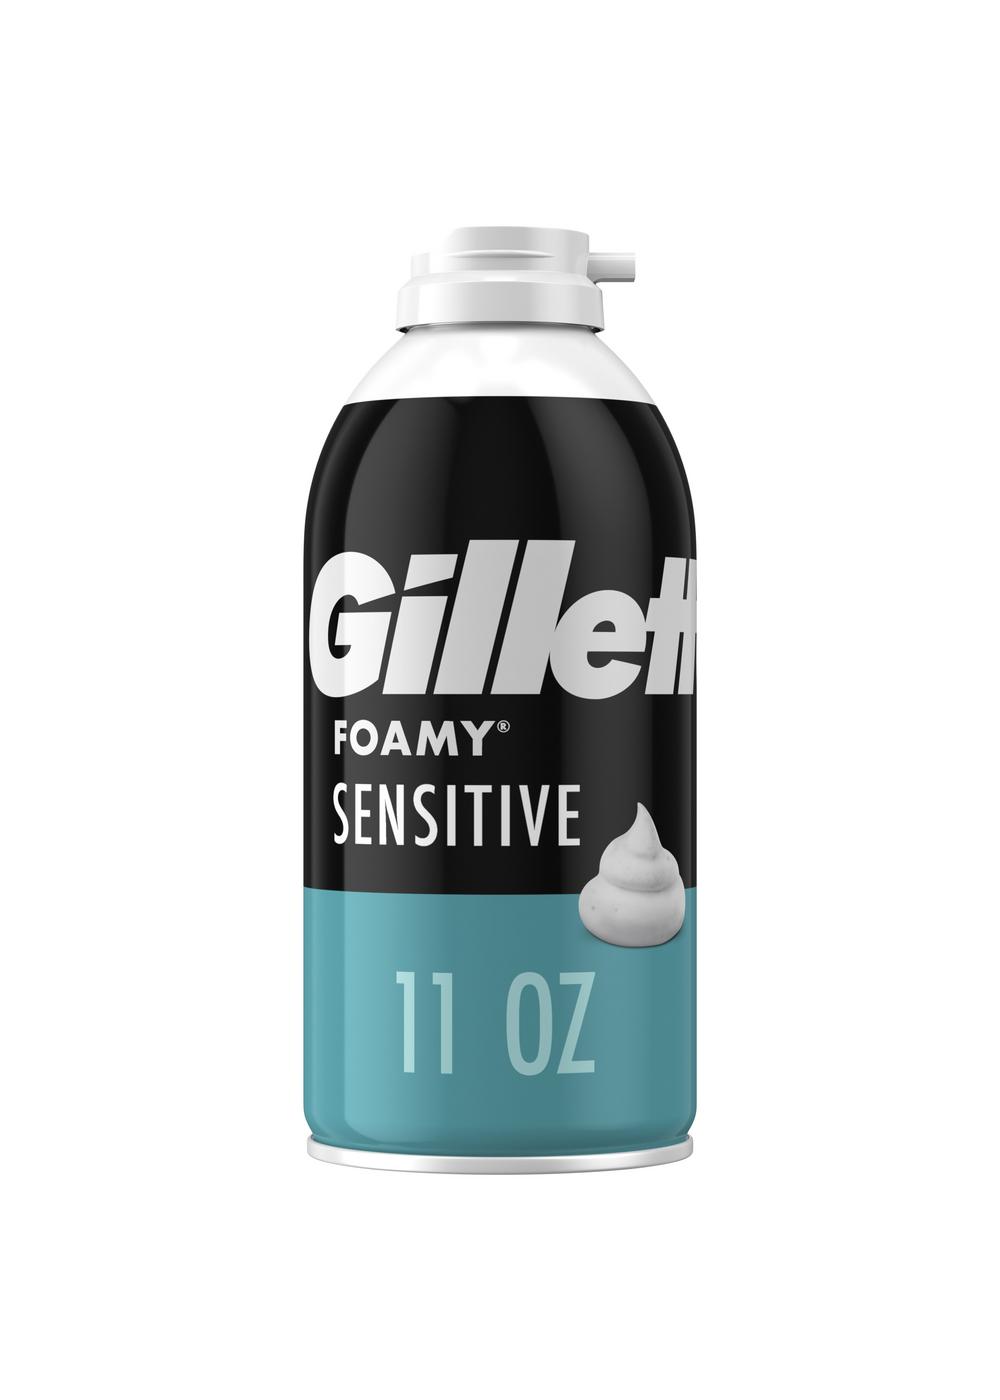 Gillette Foamy Shave Foam -  Sensitive; image 10 of 10